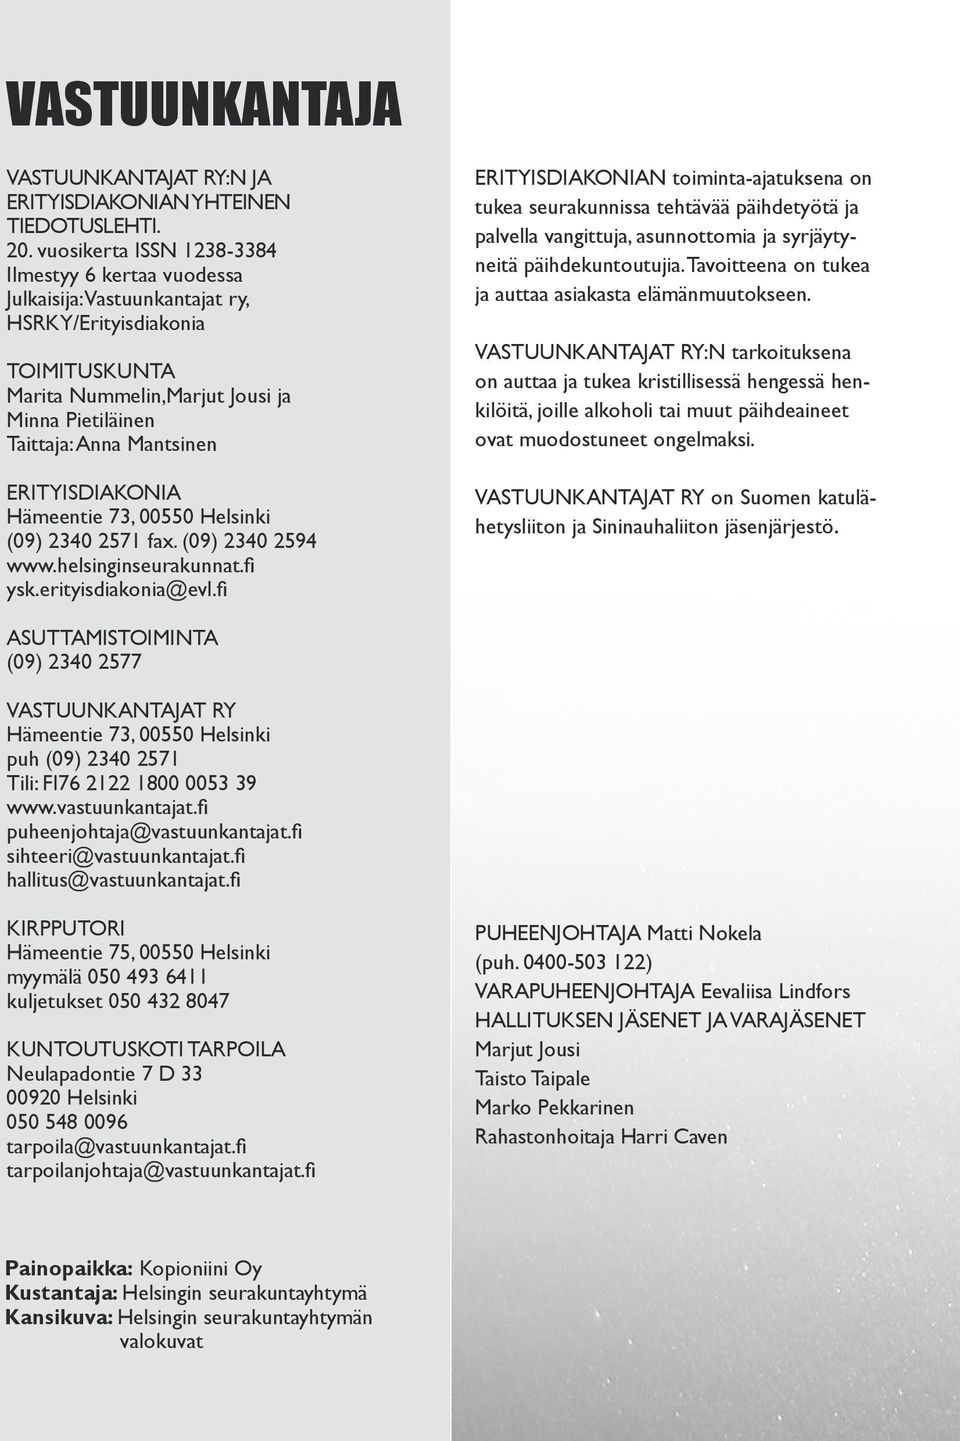 Erityisdiakonia Hämeentie 73, 00550 Helsinki (09) 2340 2571 fax. (09) 2340 2594 www.helsinginseurakunnat.fi ysk.erityisdiakonia@evl.